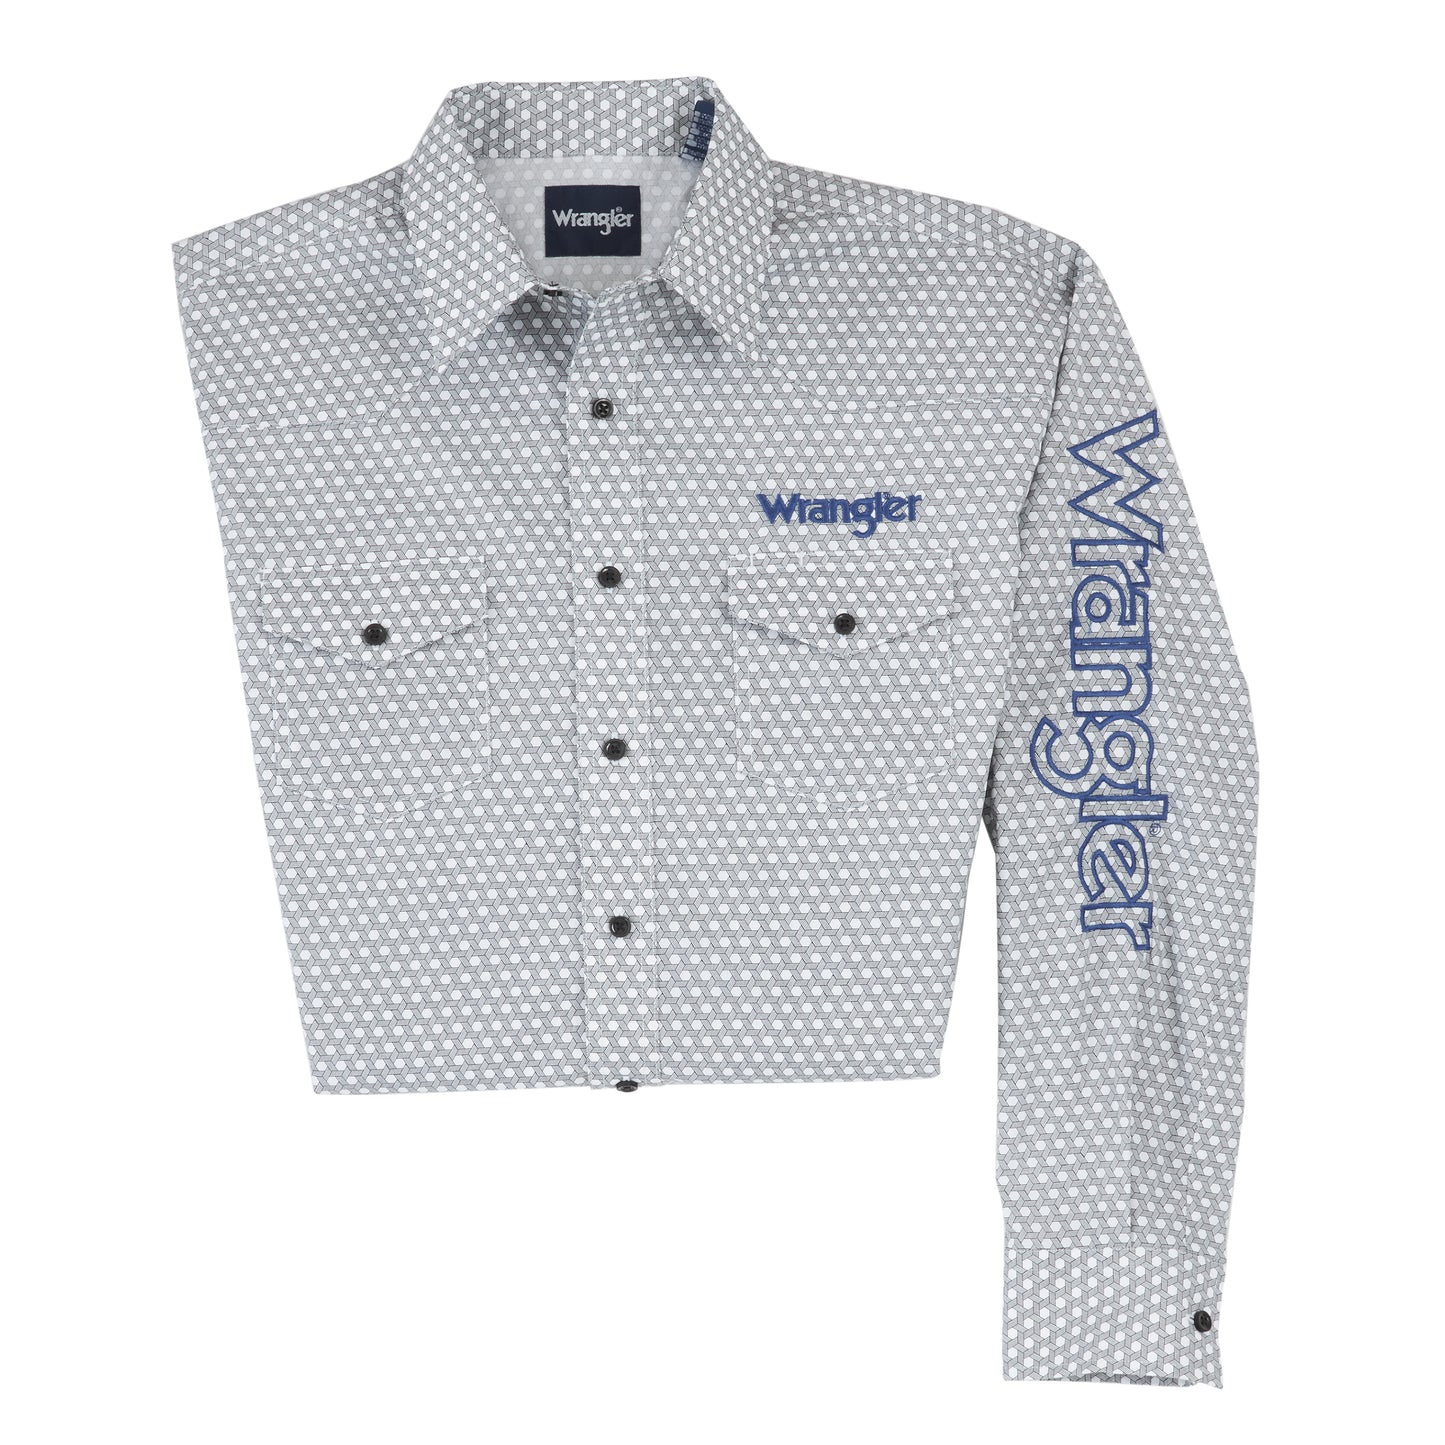 Wrangler USA Mens Logo L/S Shirt - White - MP1352X - On Sale